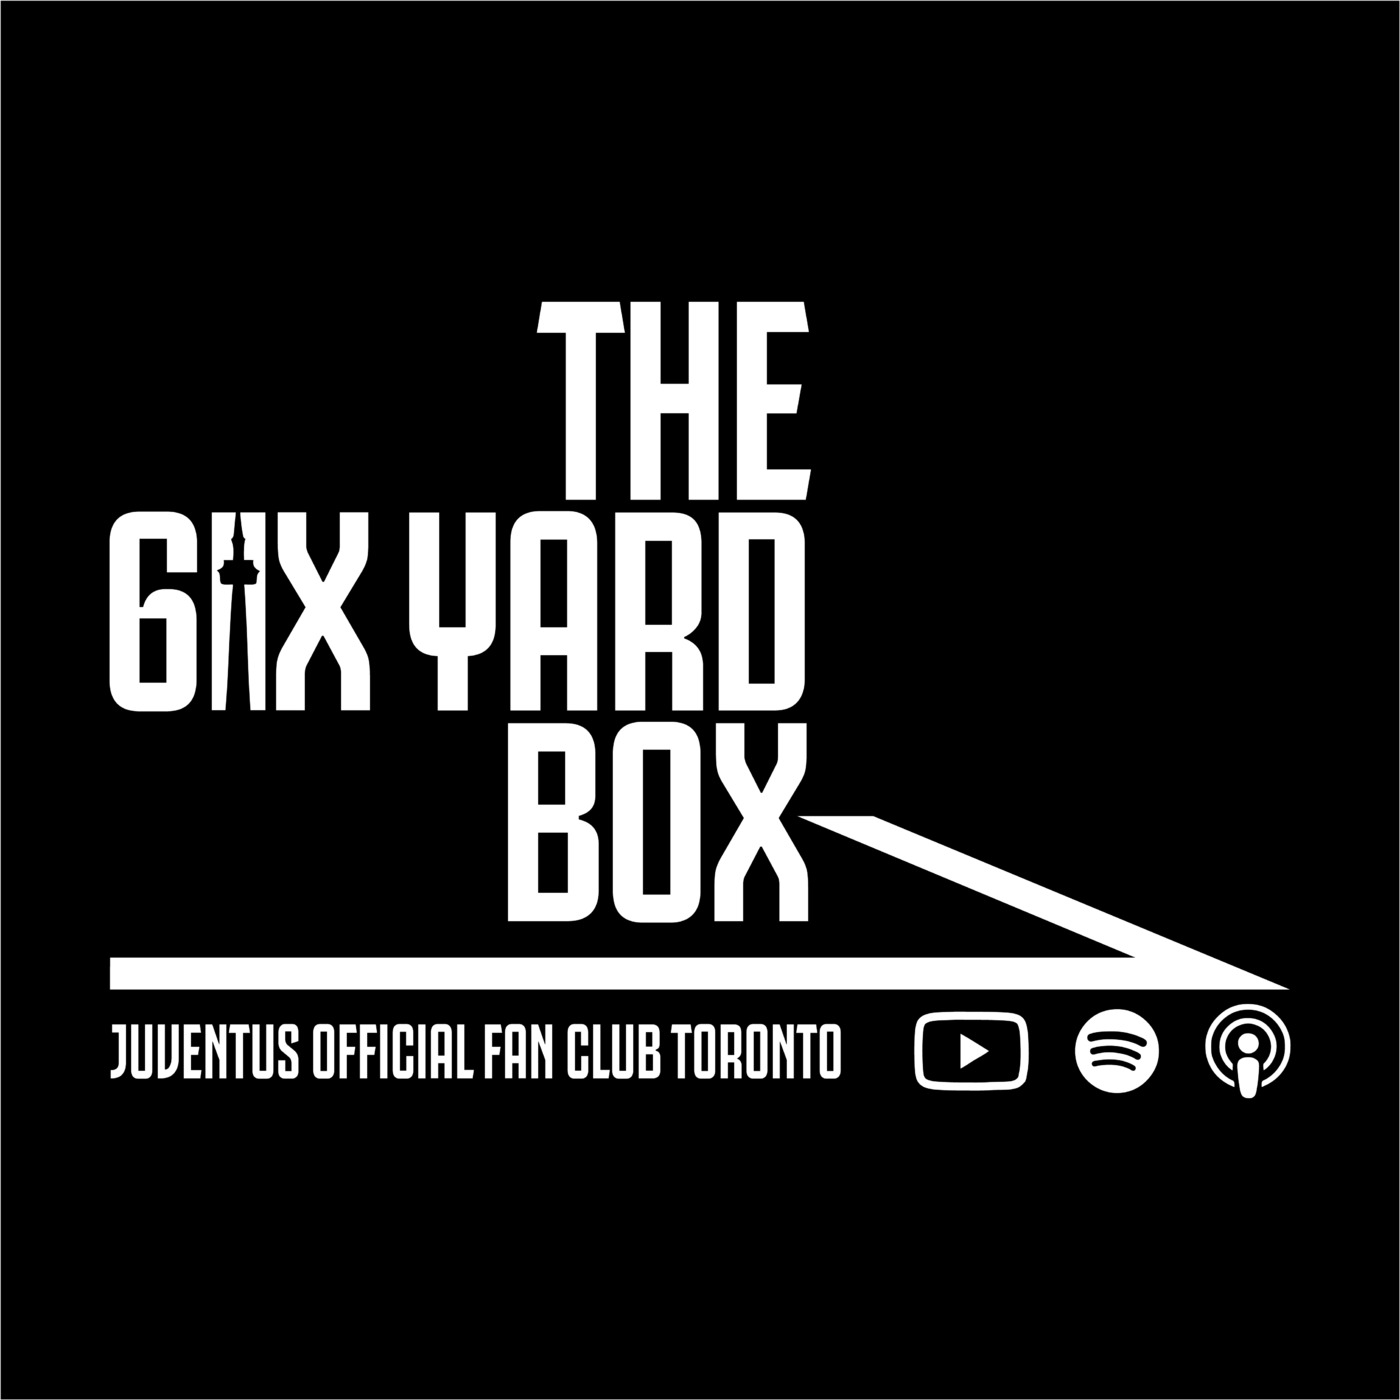 Episode 13: The 6ix Yard Box Podcast Episode 13- Super League Edition